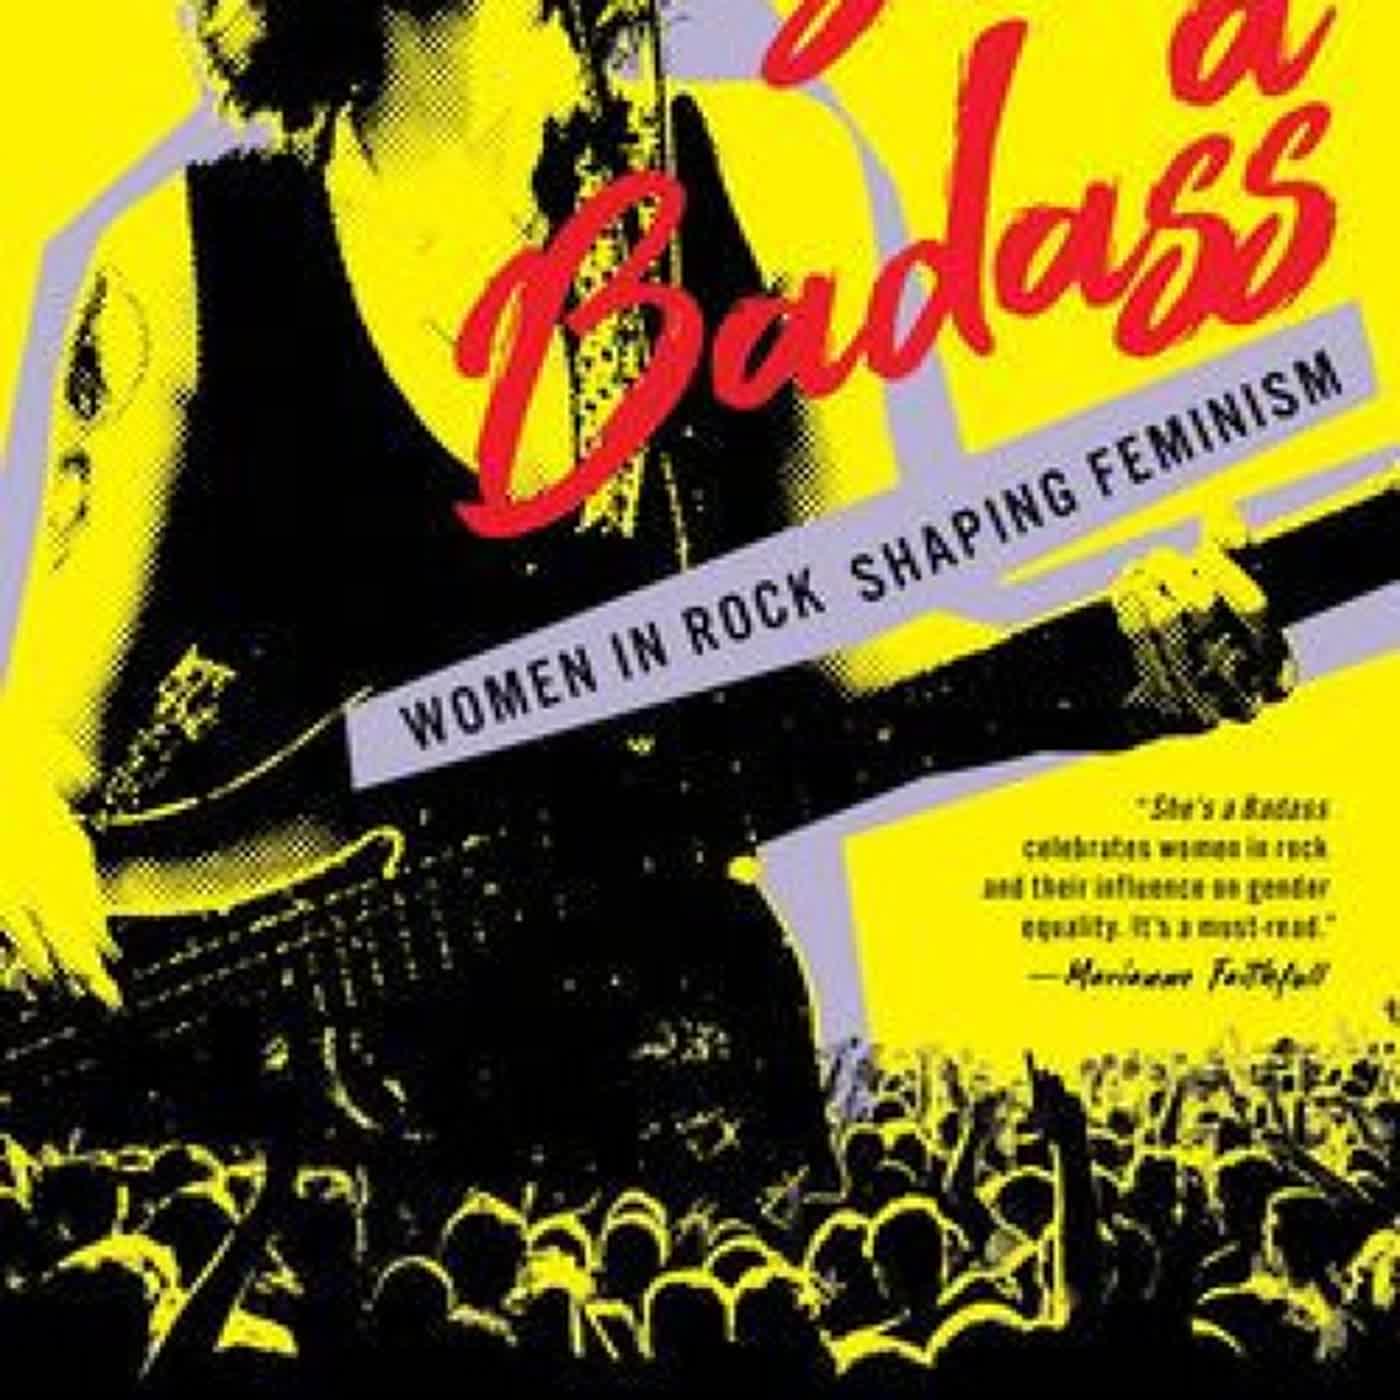 Read [Pdf]> She's a Badass: Women in Rock Shaping Feminism by Katherine Yeske Taylor